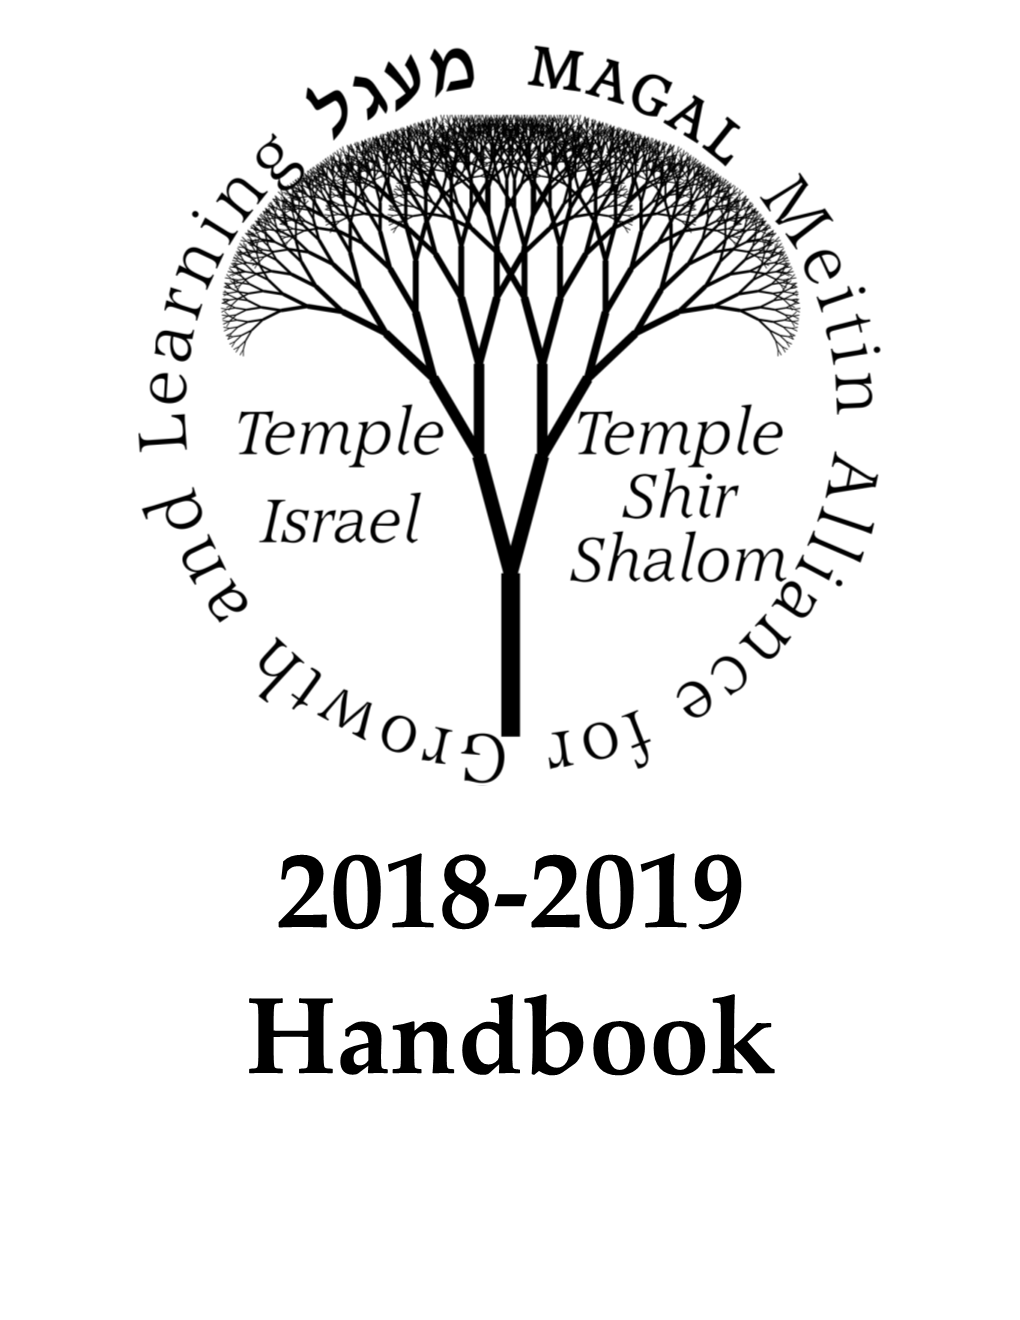 2018-2019 MAGAL Handbook